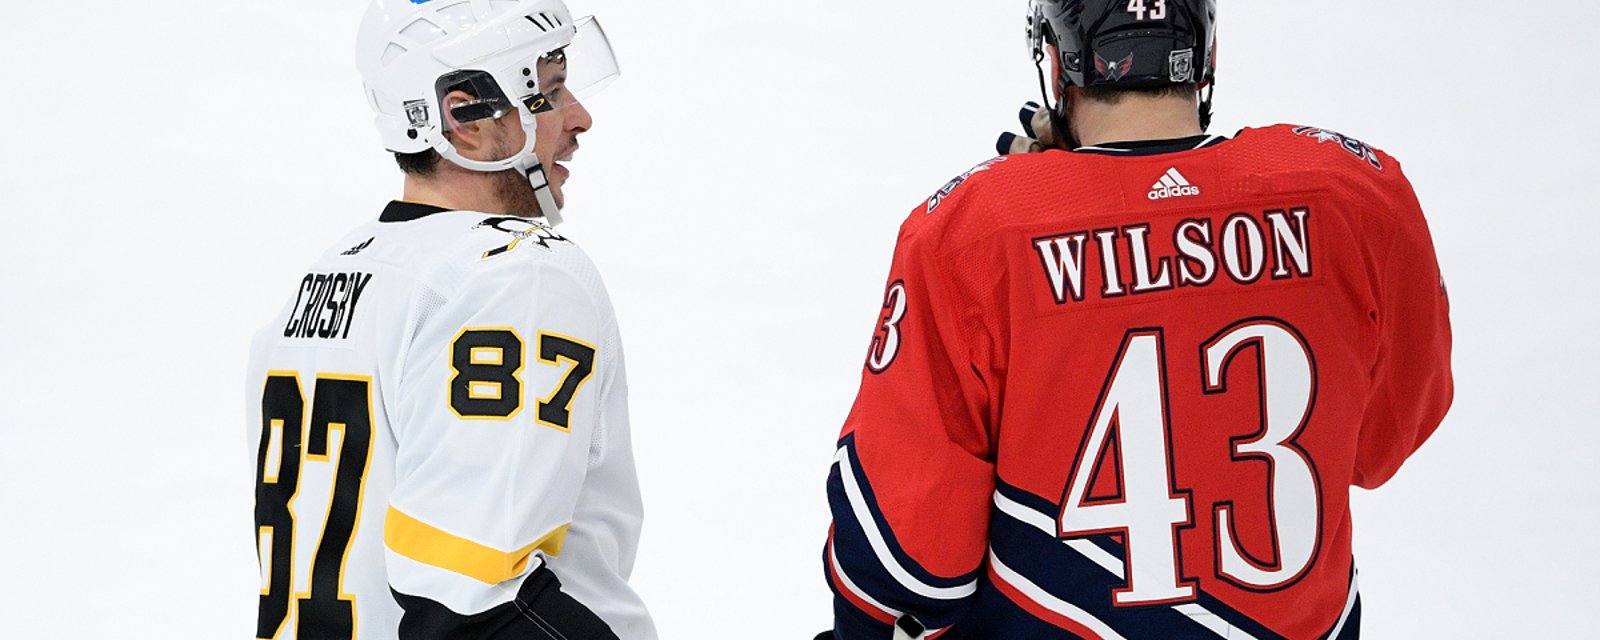 Tom Wilson shares his true feelings on rival Sidney Crosby.